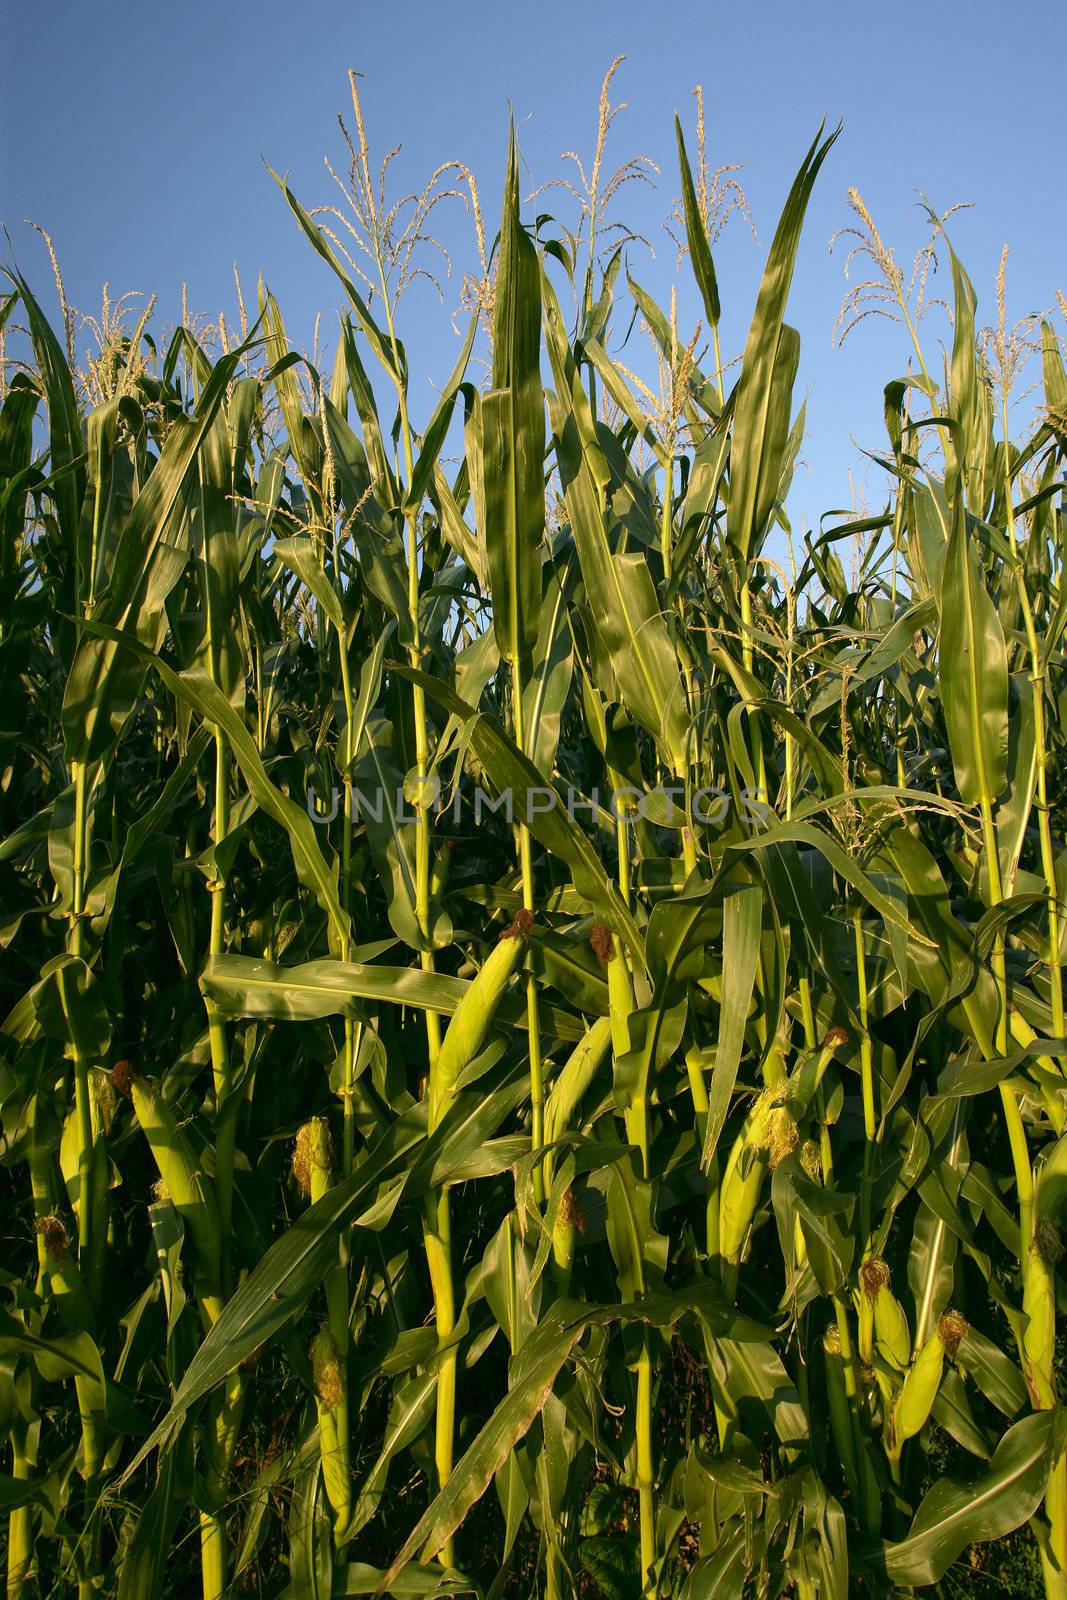 Growing corn stalks under a clear sky.
